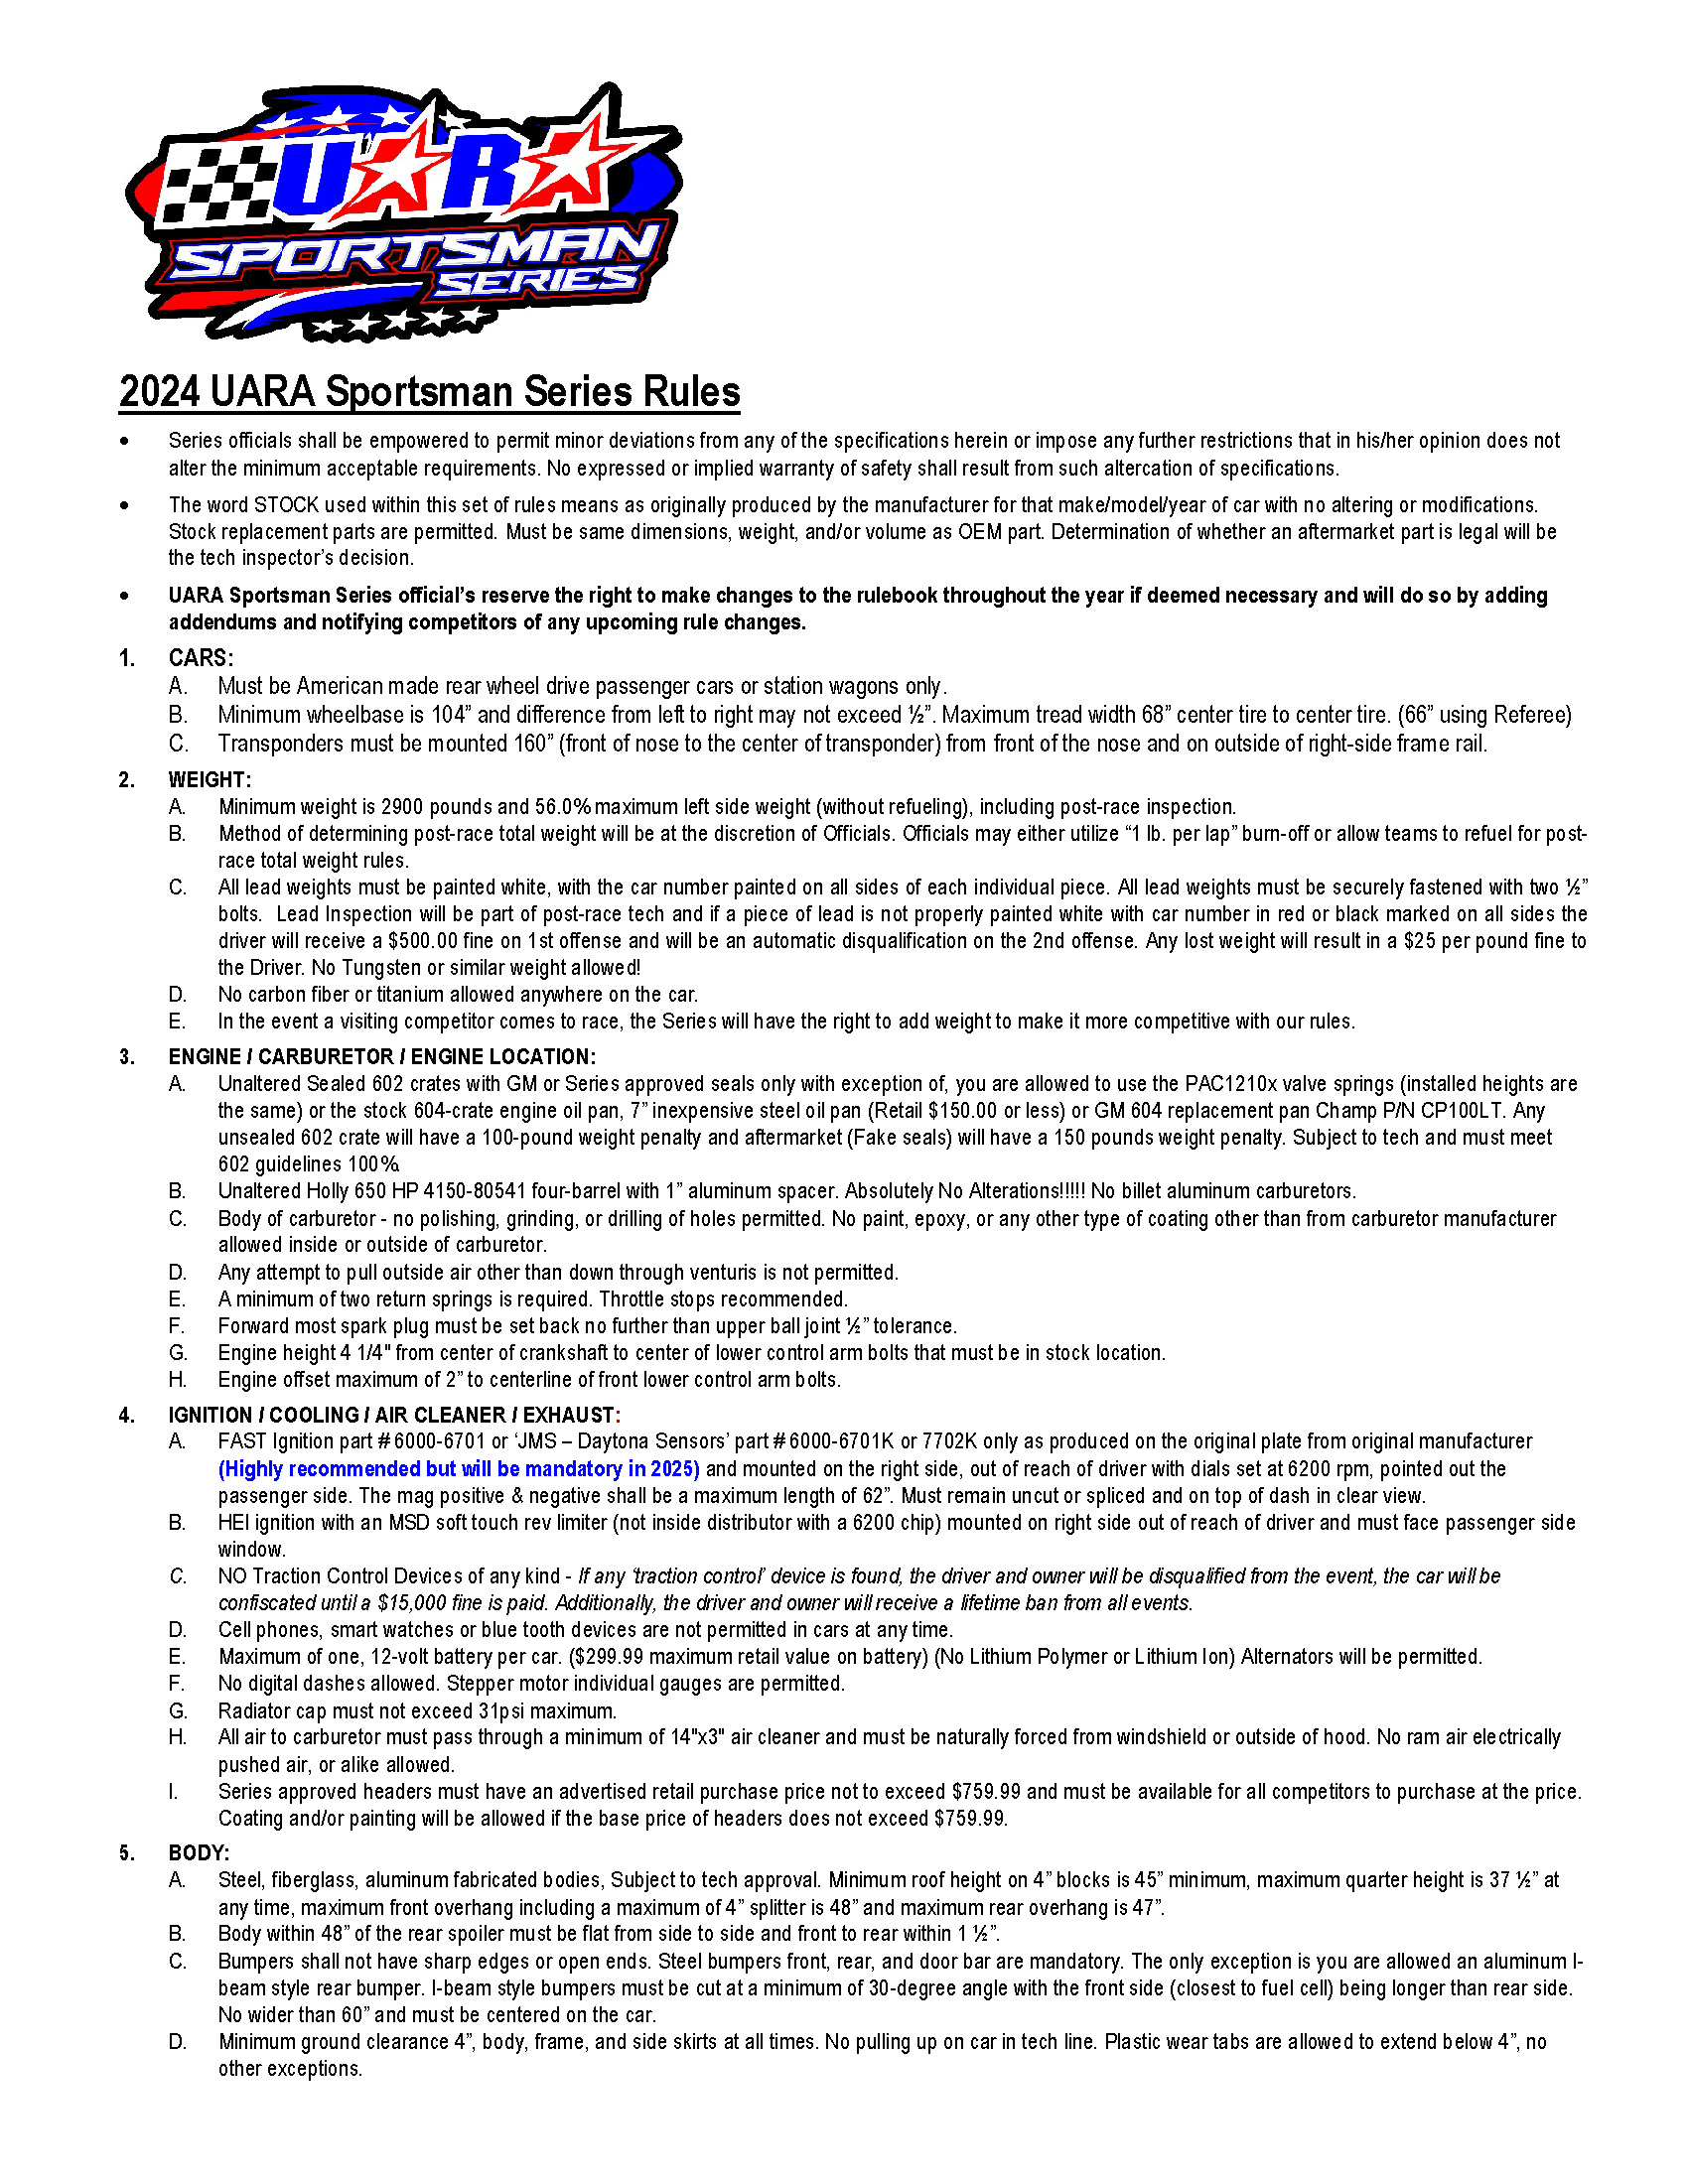 UARA Sportsman Series Rules - Page 1/6